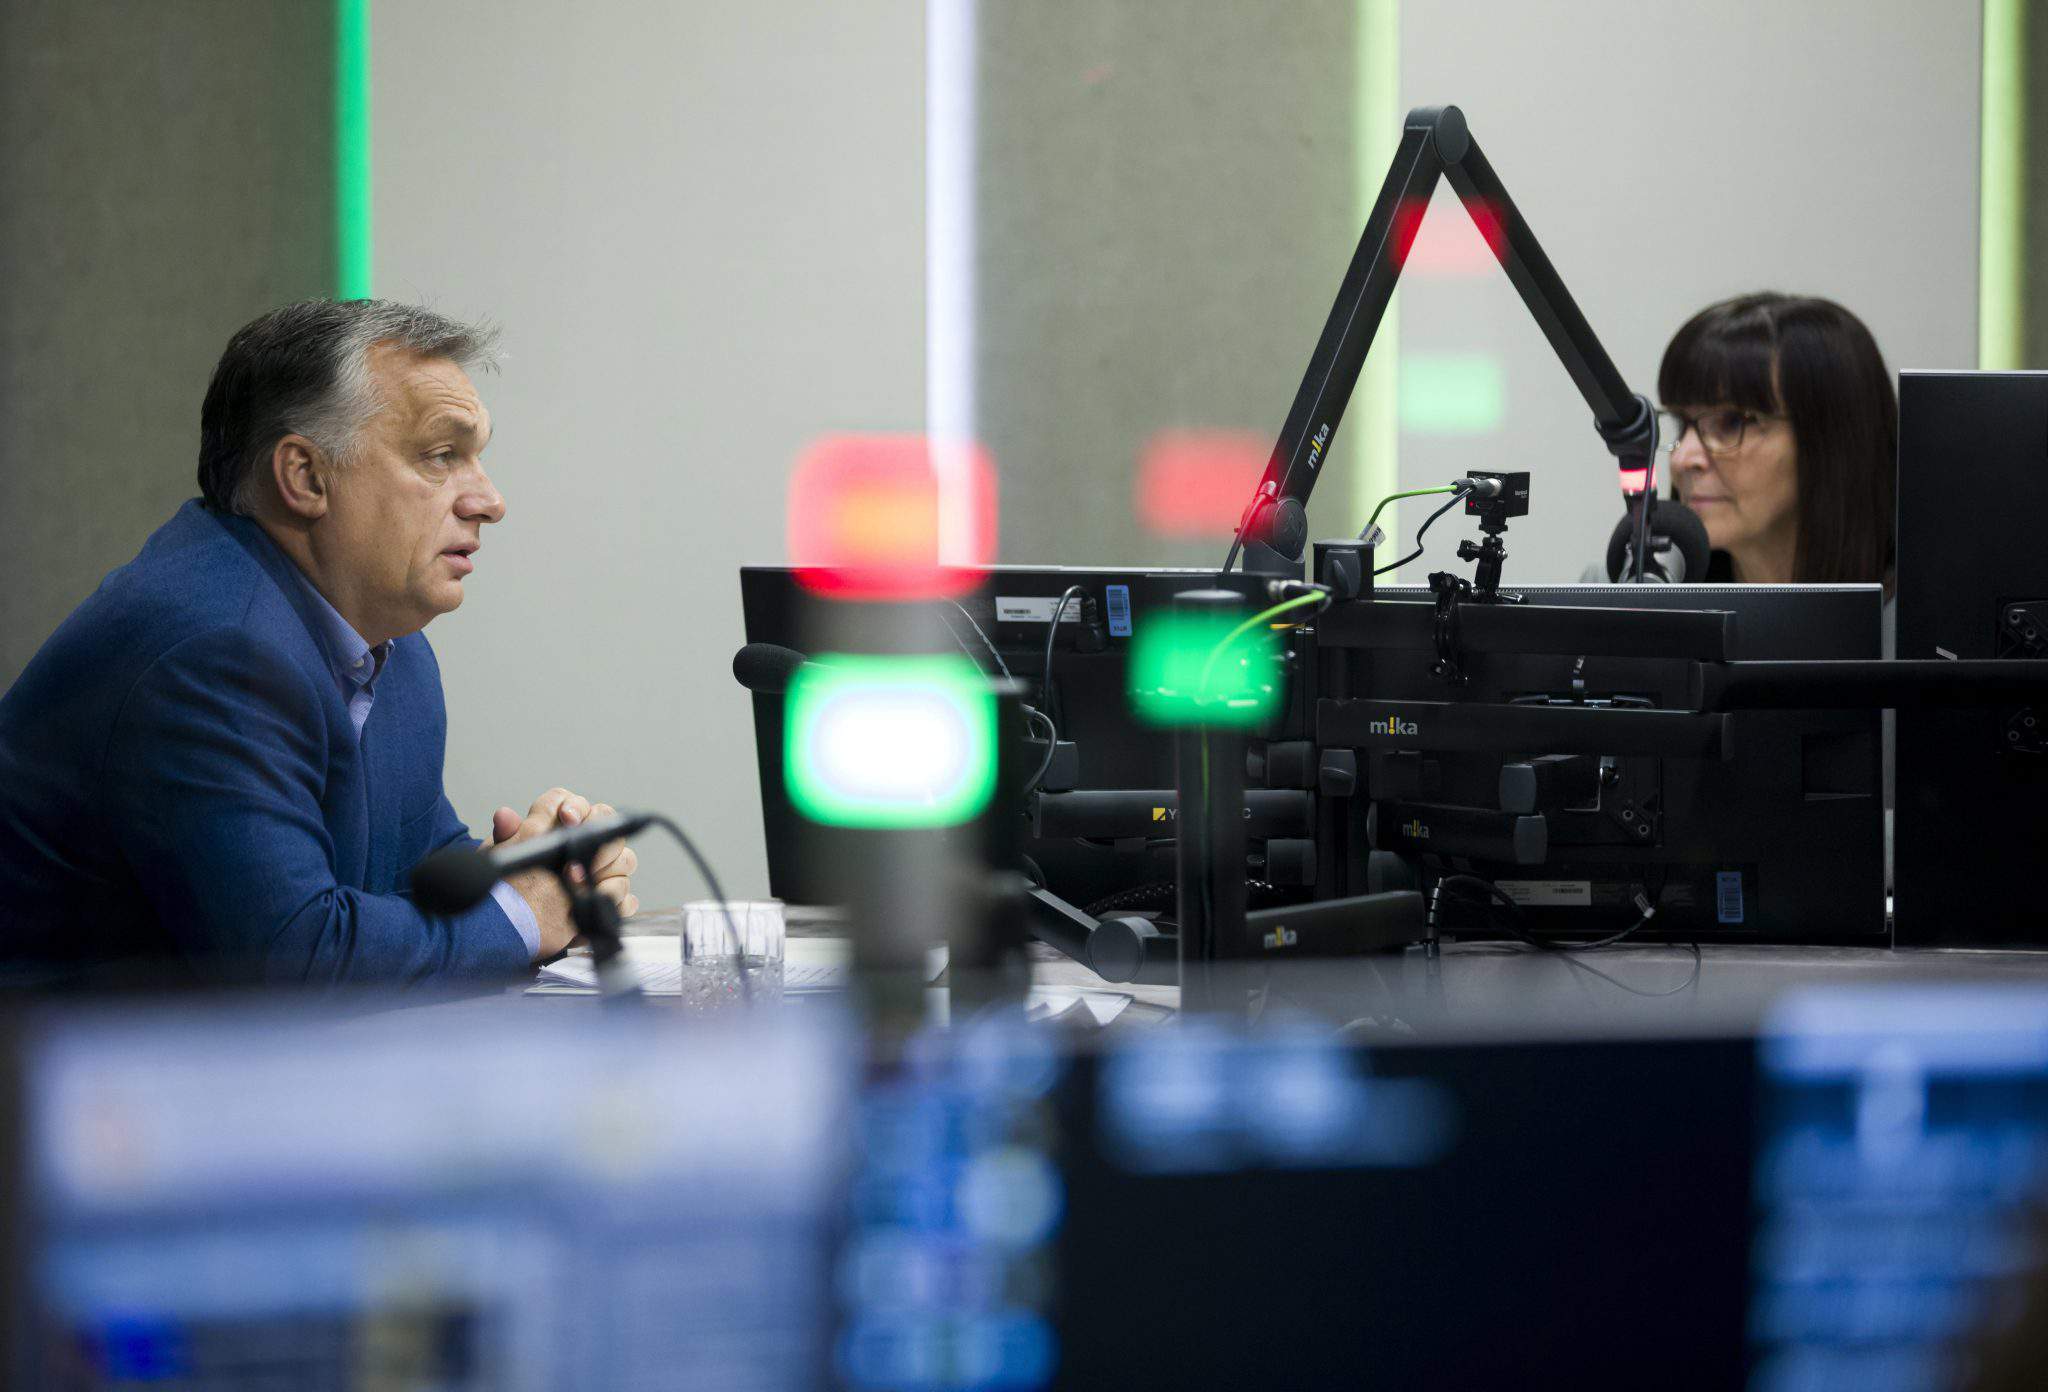 interviu radio orbán